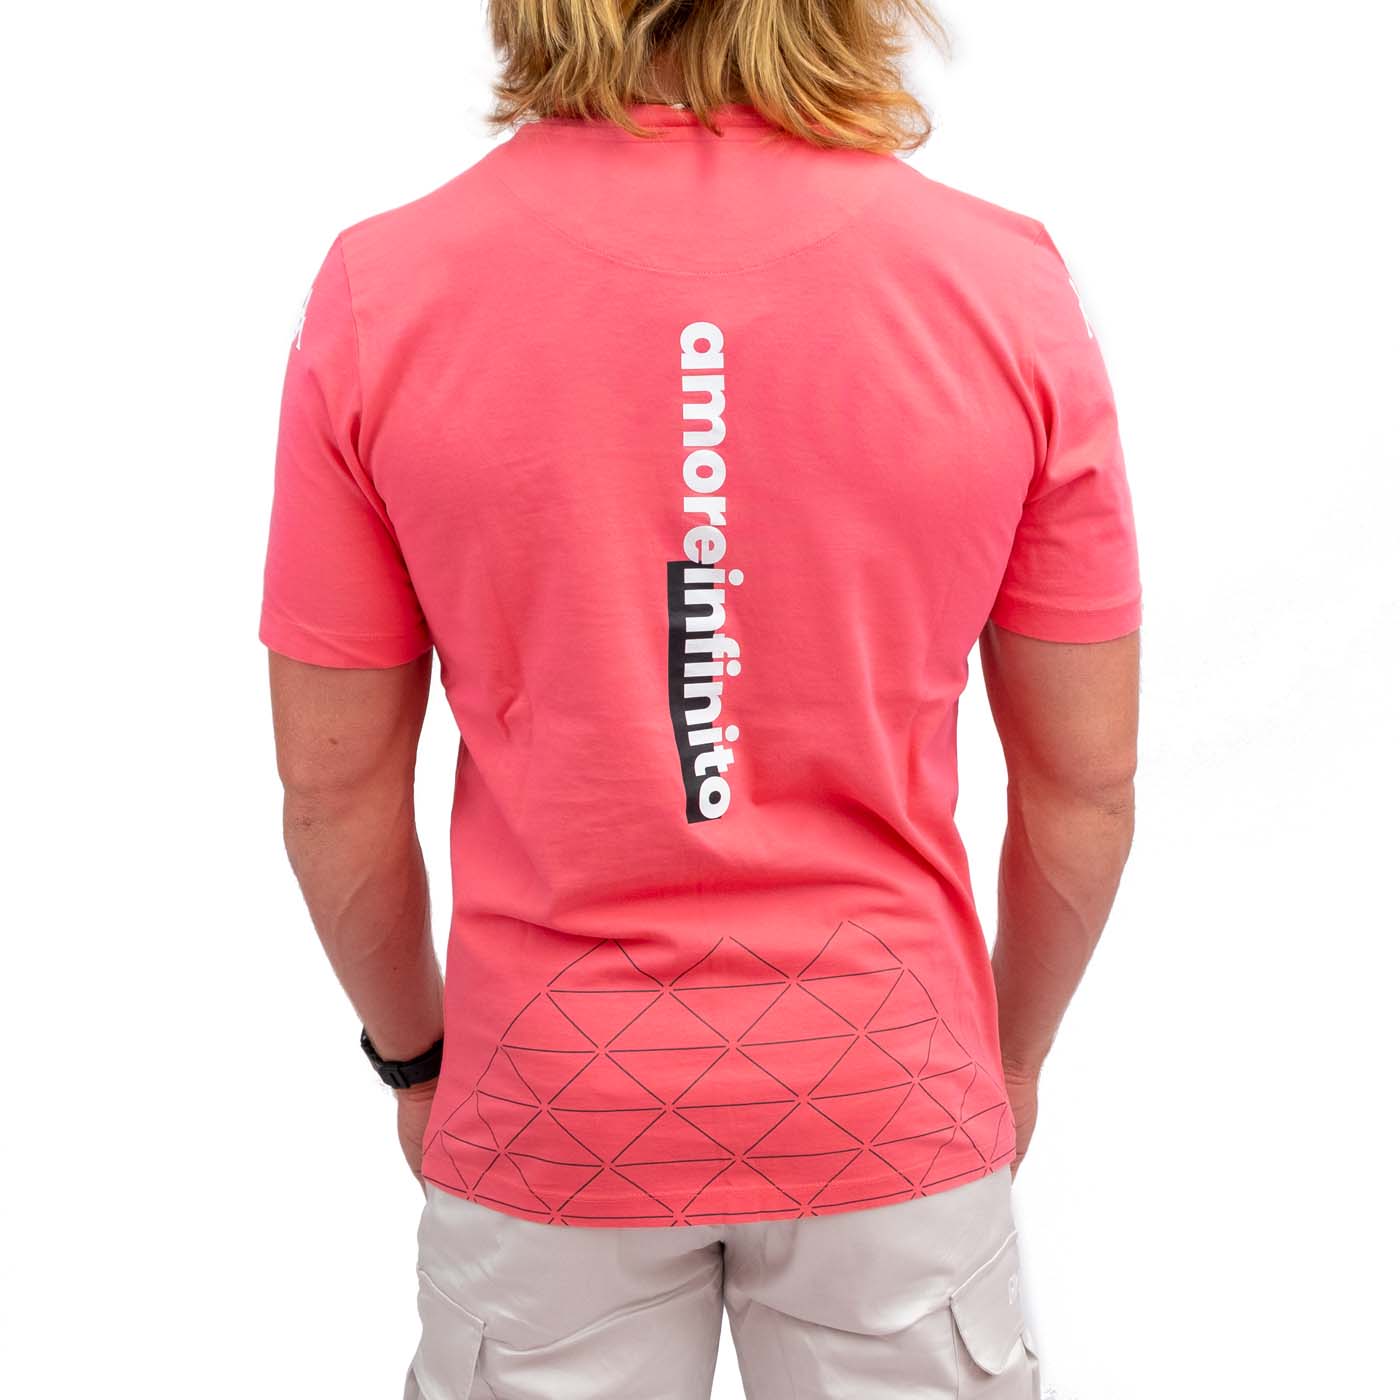 Camiseta Giro d'Italia Eroi - Rosa